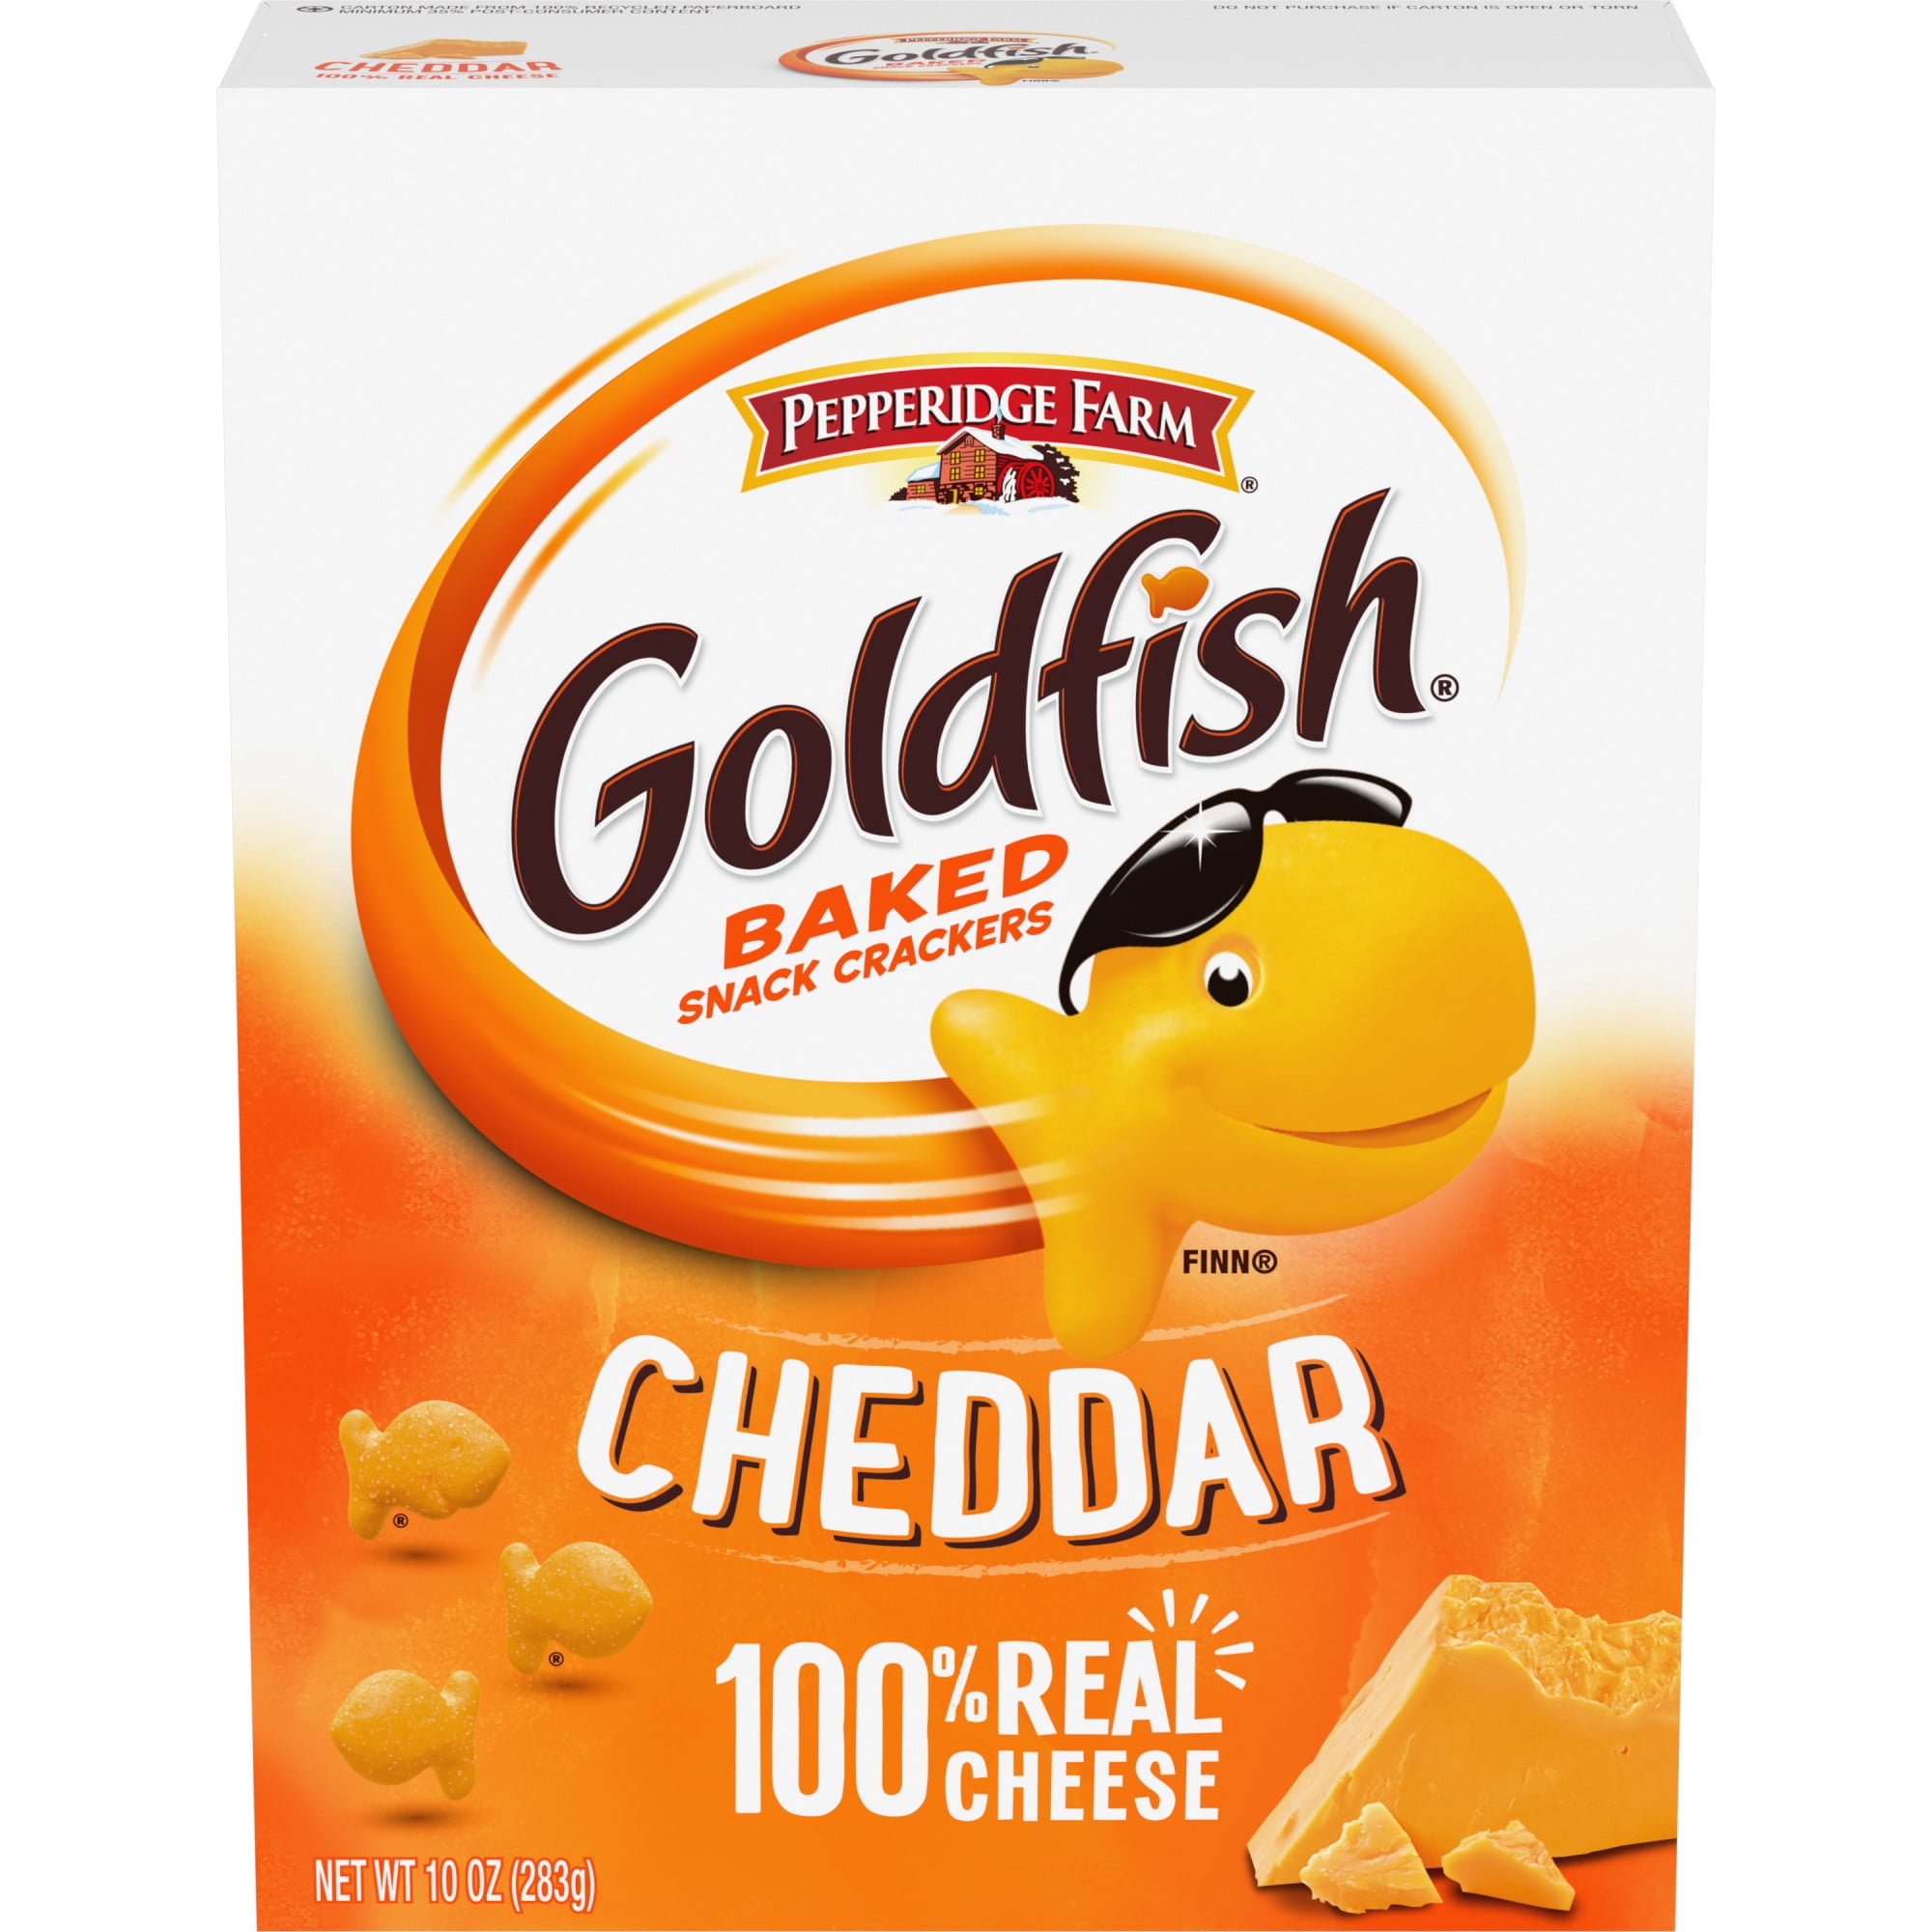 Goldfish Cheddar Crackers, Snack Crackers, 30 oz carton - Walmart.com